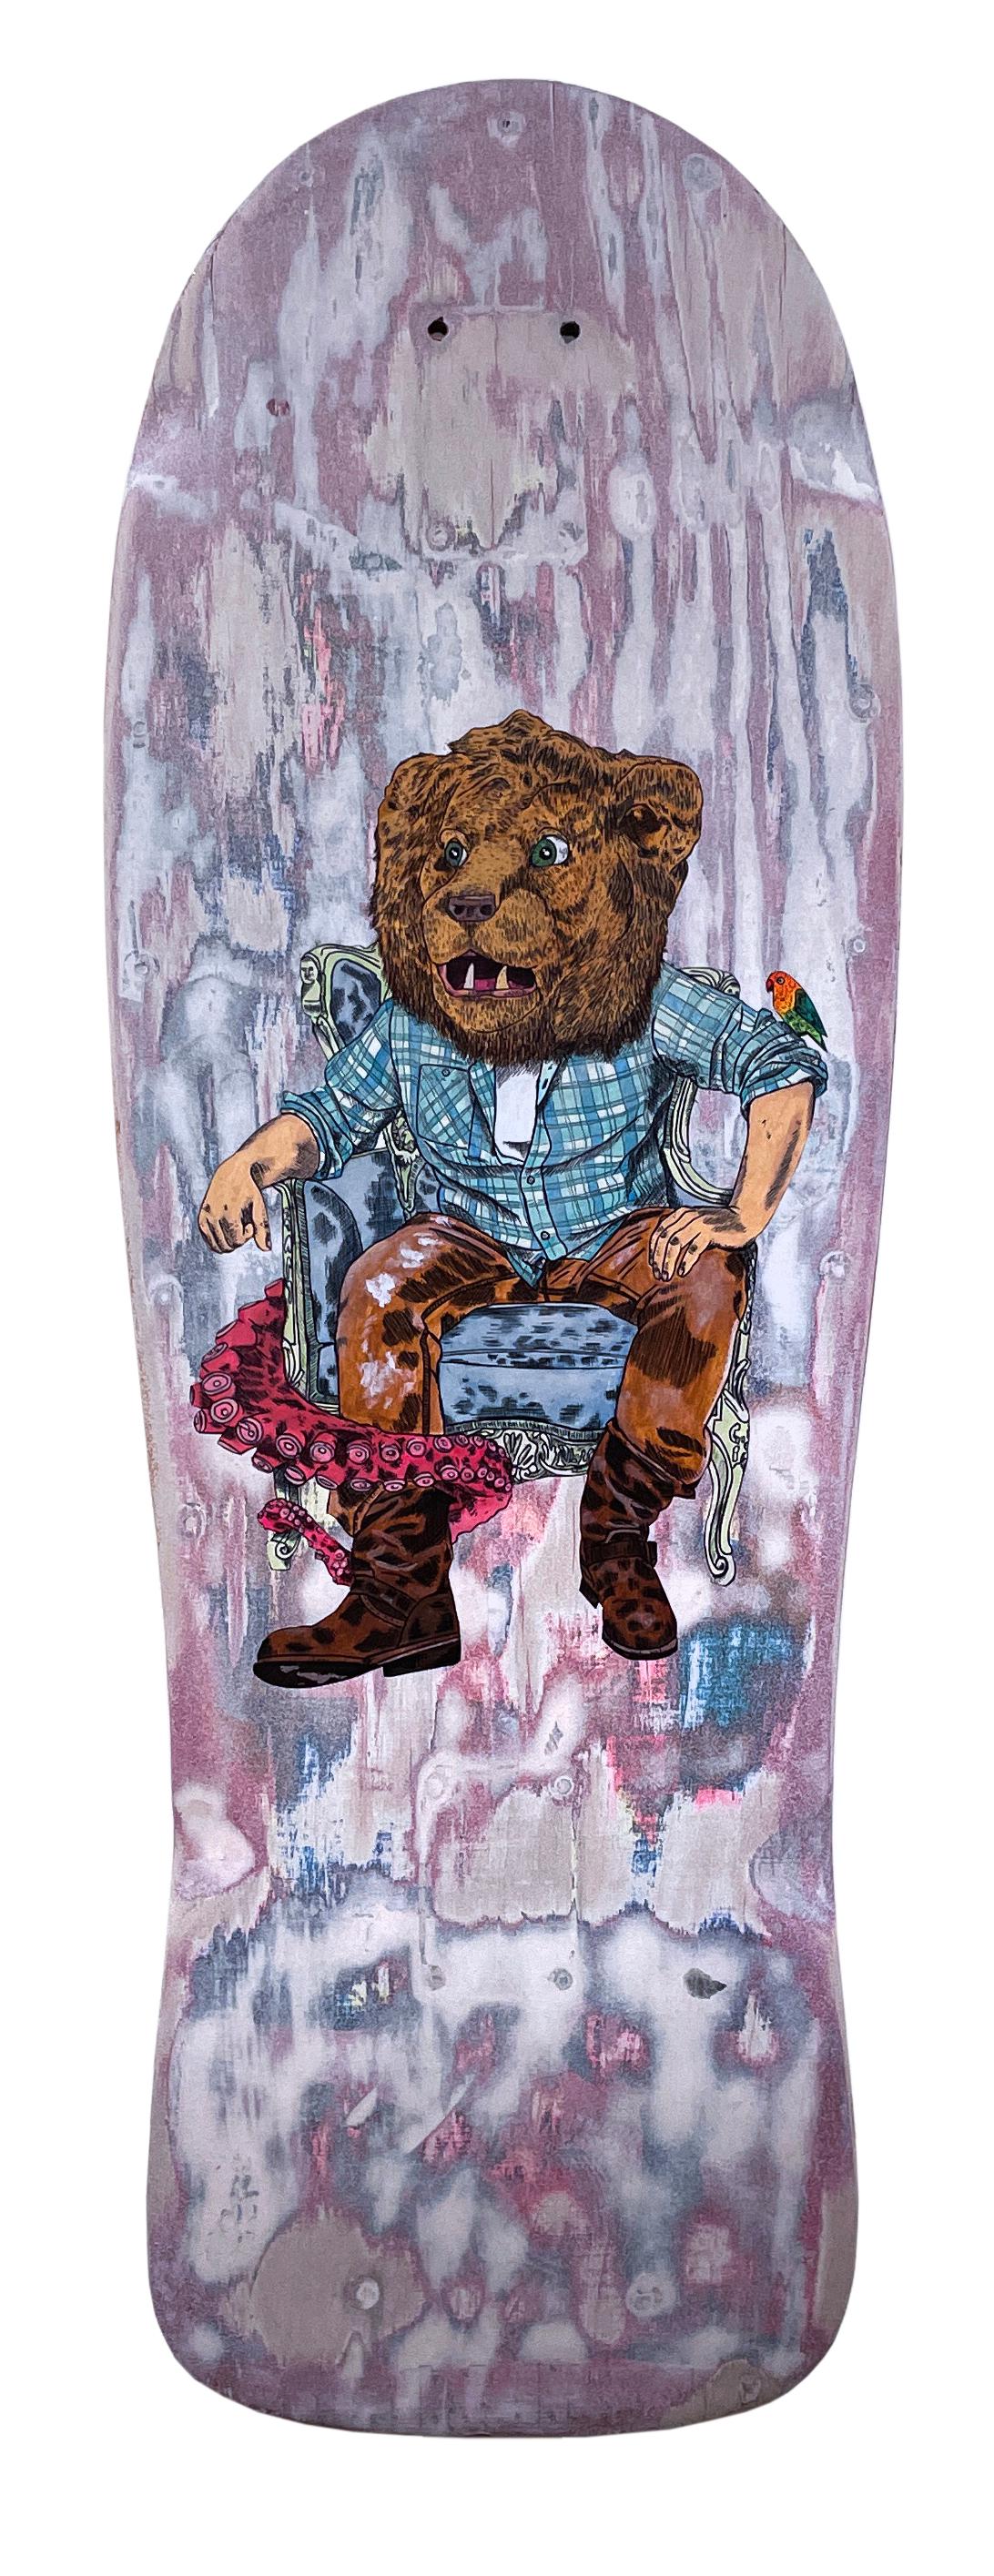 Sean 9 Lugo Figurative Painting - Octavius, 2020, graffiti urban street art mixed media lion wheatpaste skateboard